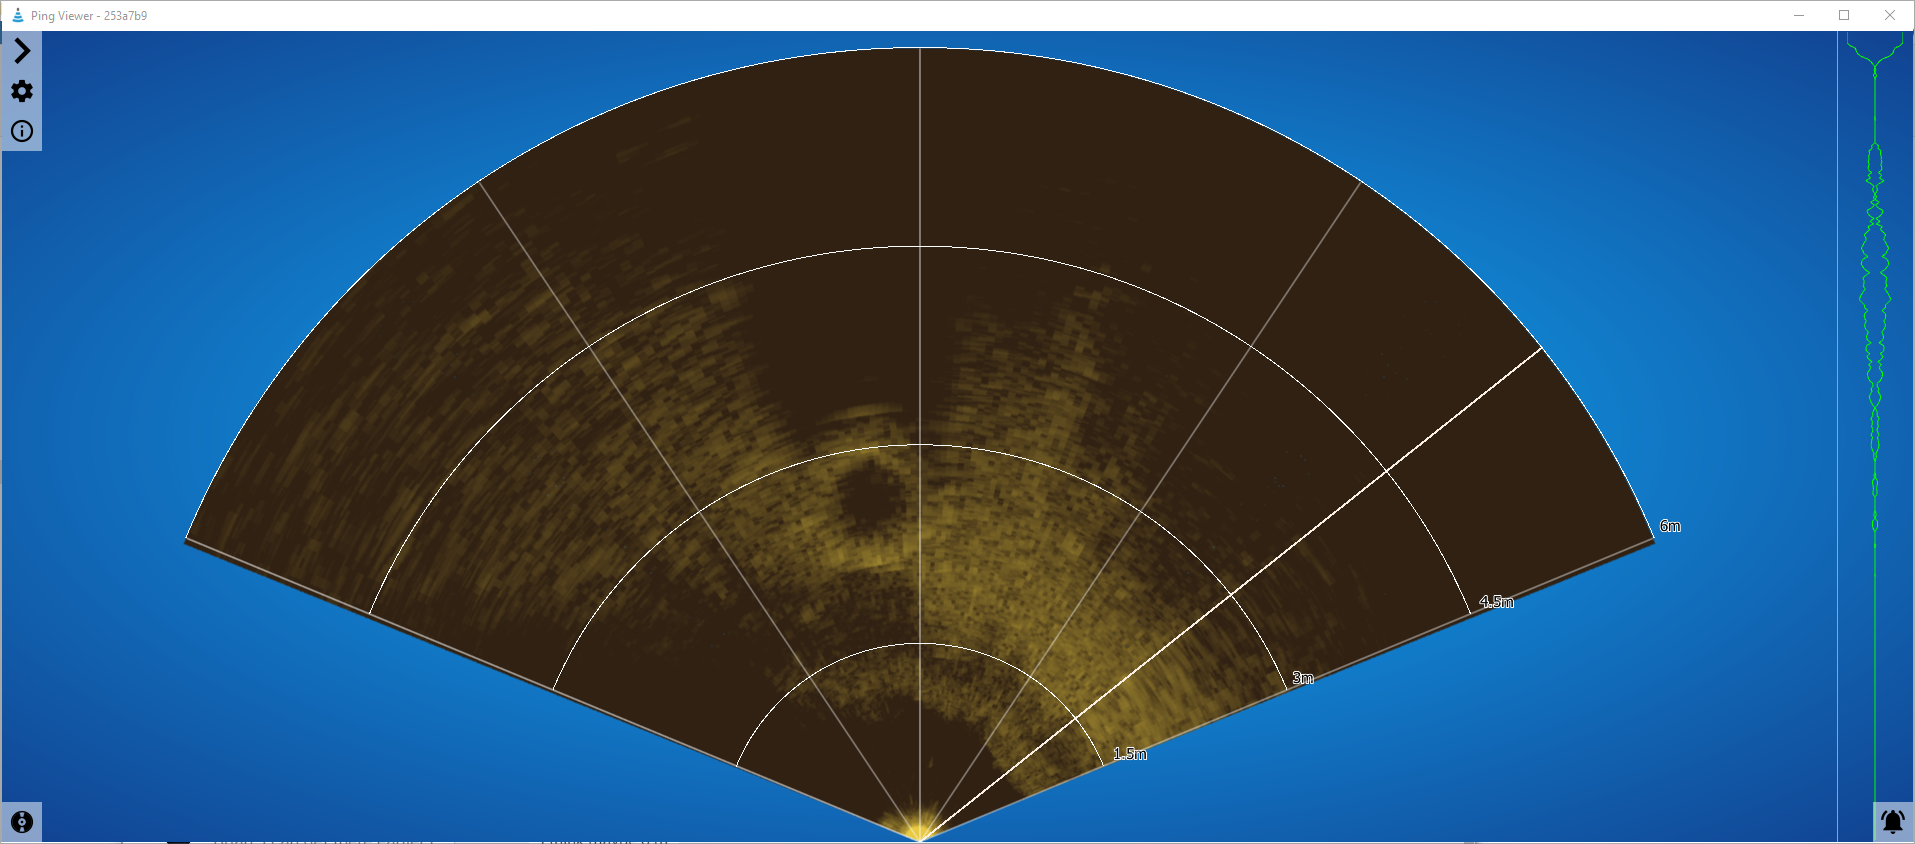 Ping360 Scanning Imaging Sonar for Underwater ROVs